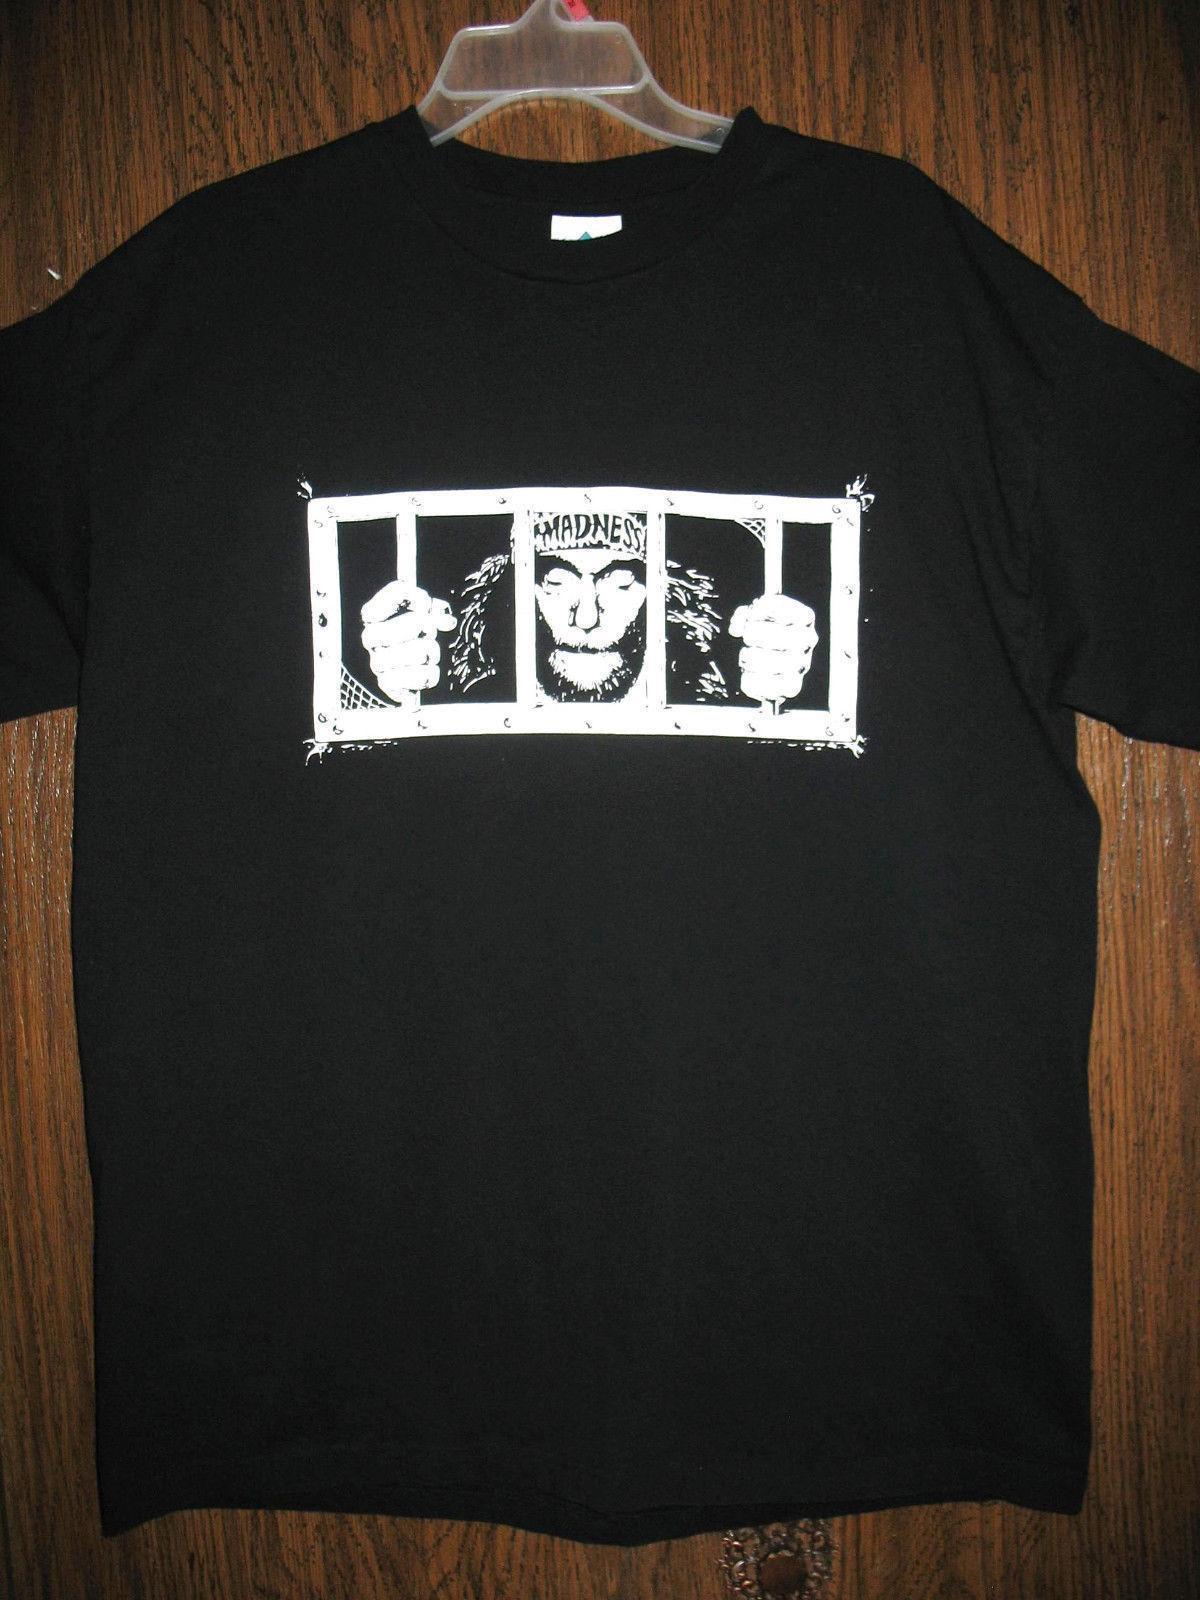 Randy Savage Madness Logo - Macho Man Randy Savage NWo Madness Prison WCW Shirt New Gildan Reprint Short Sleeve Men Tee O Neck Knitted Comfortable Fabric